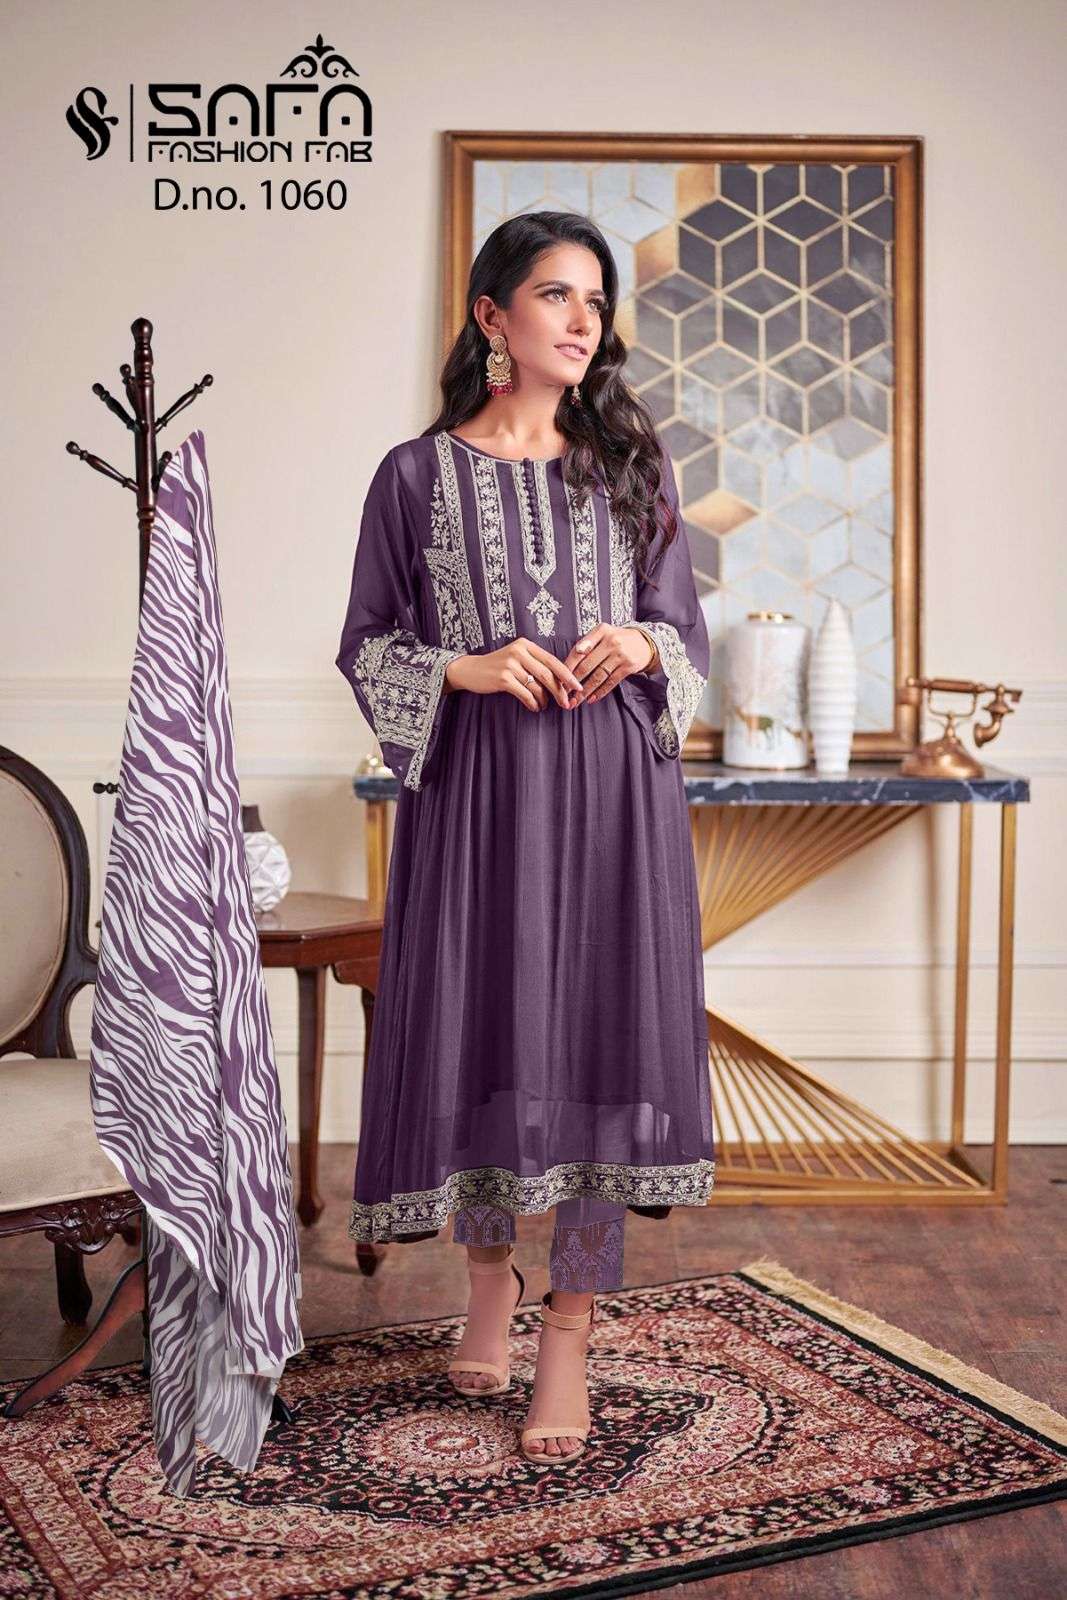 safa fashion hub 1060 colour series latest designer pakistani salwar kameez wholesaler surat gujarat